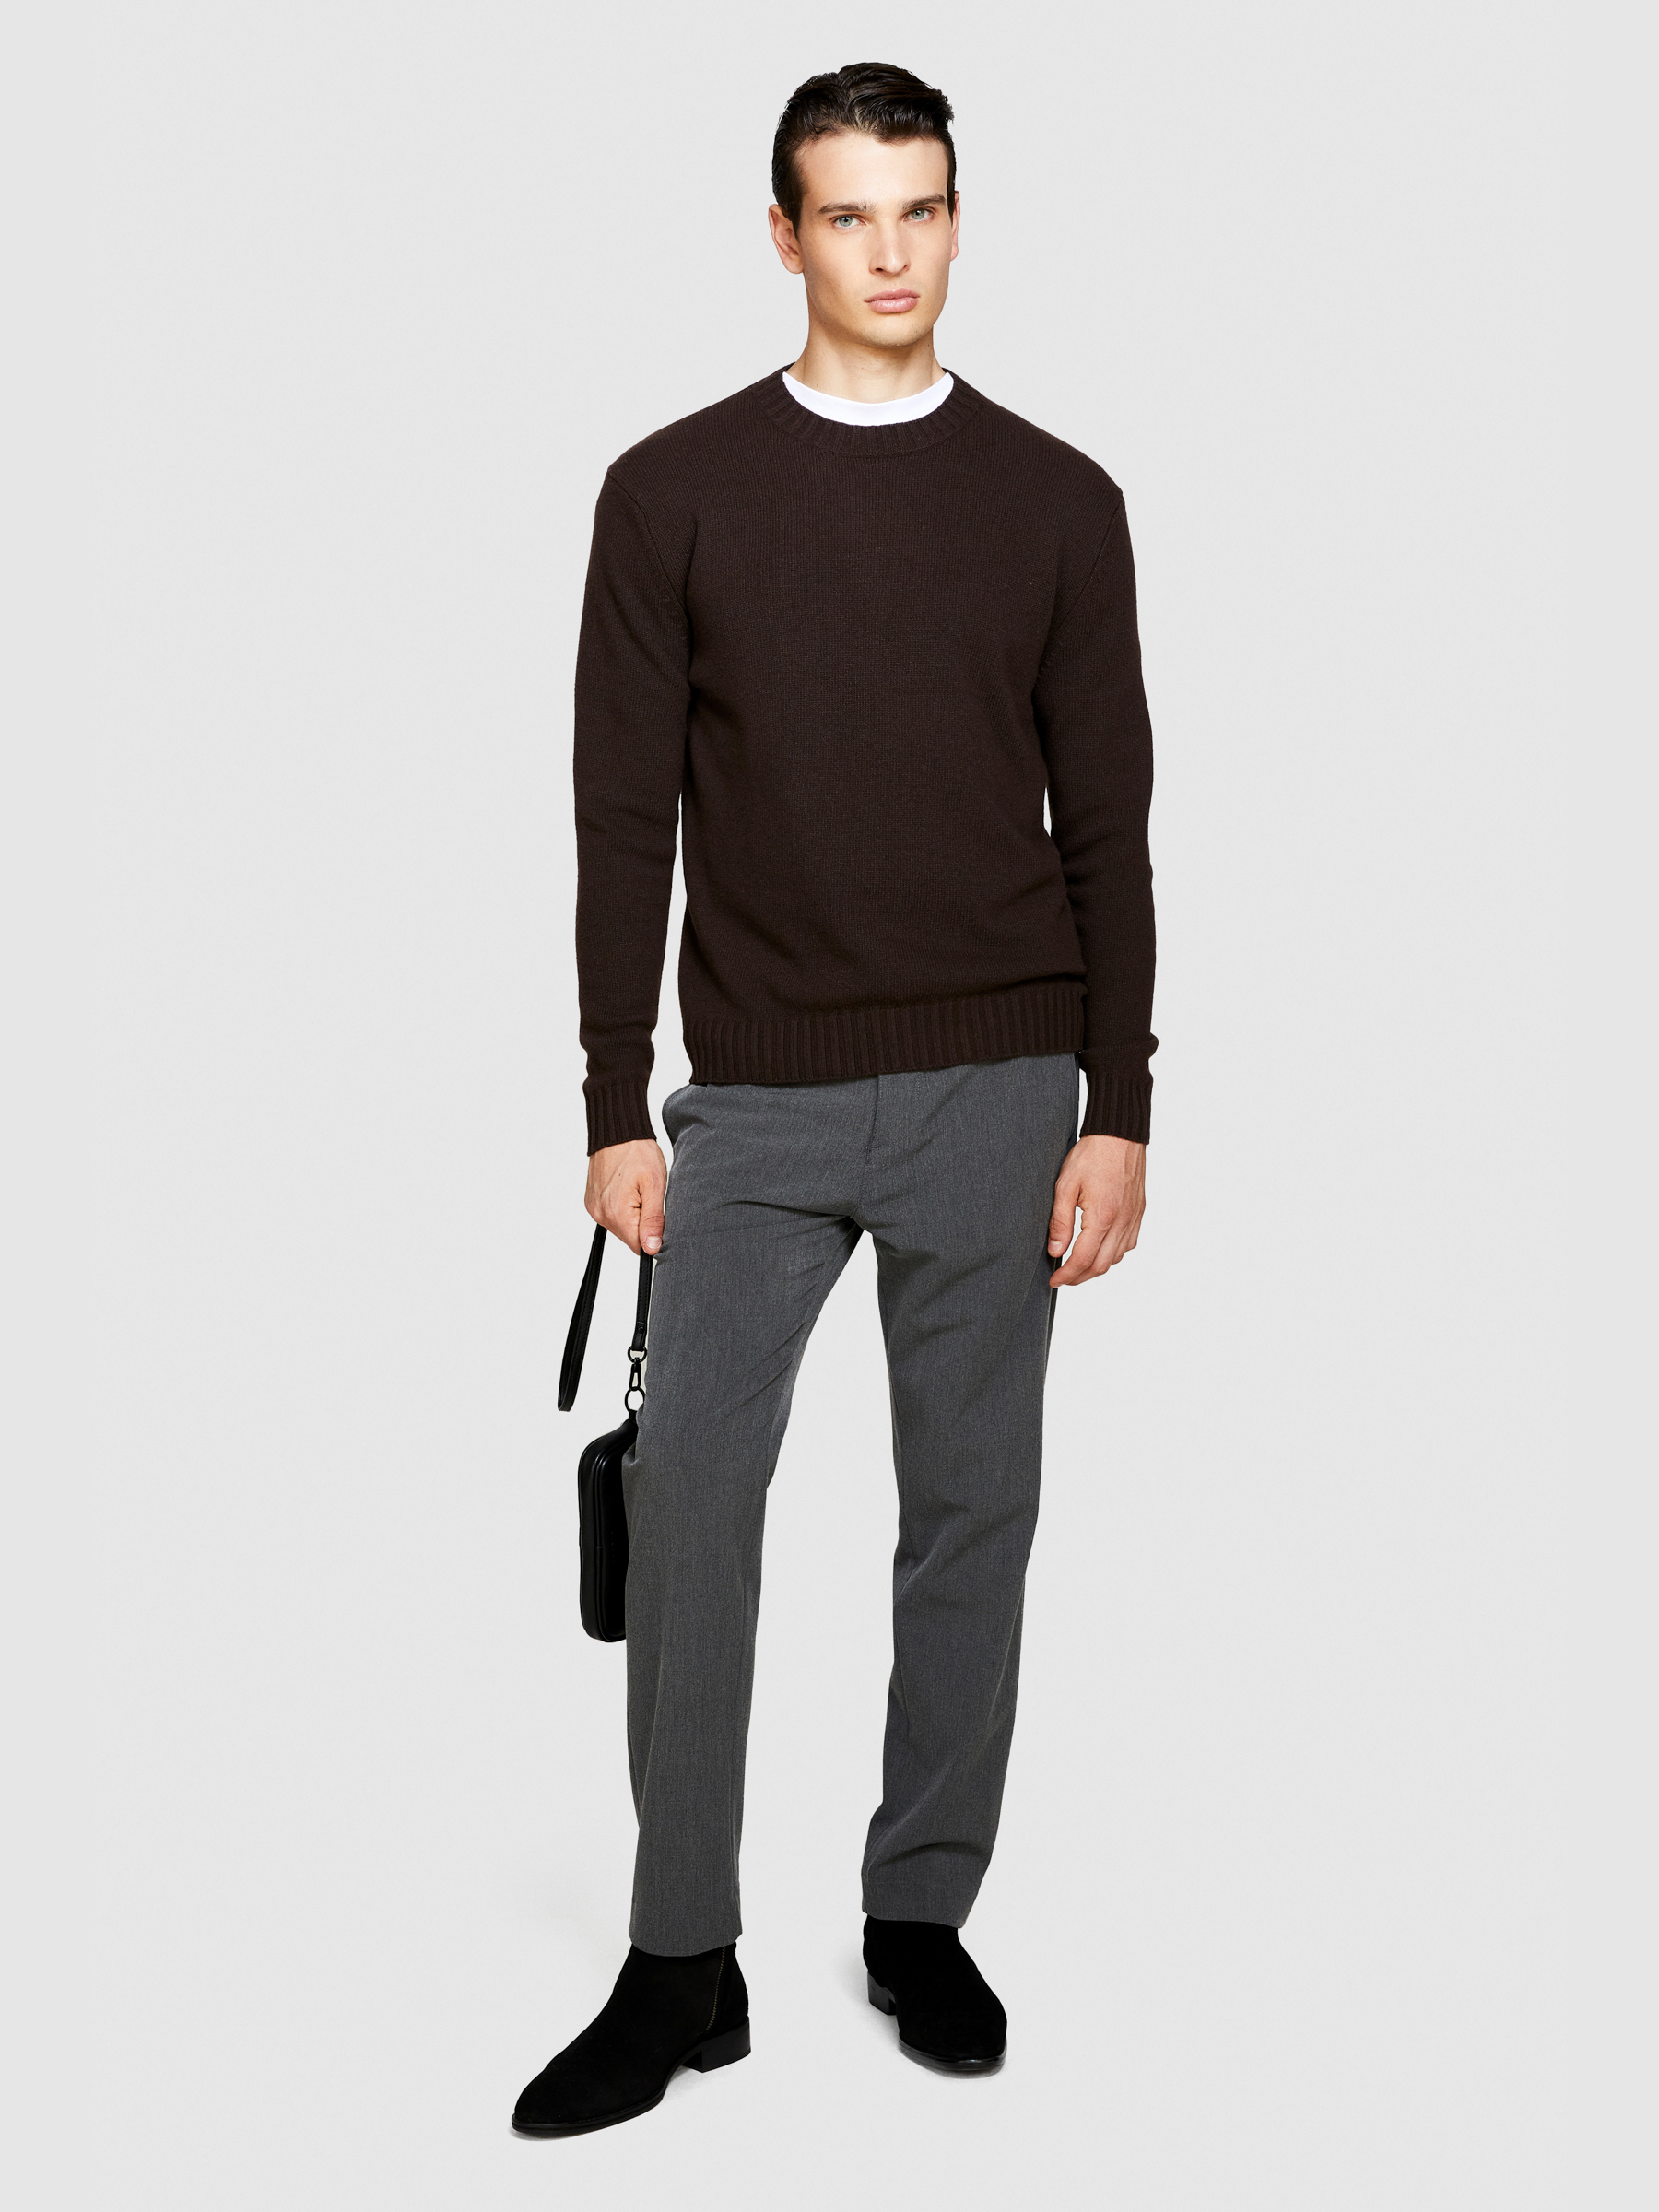 Sisley - Crew Neck Sweater In Wool Blend, Man, Dark Brown, Size: M